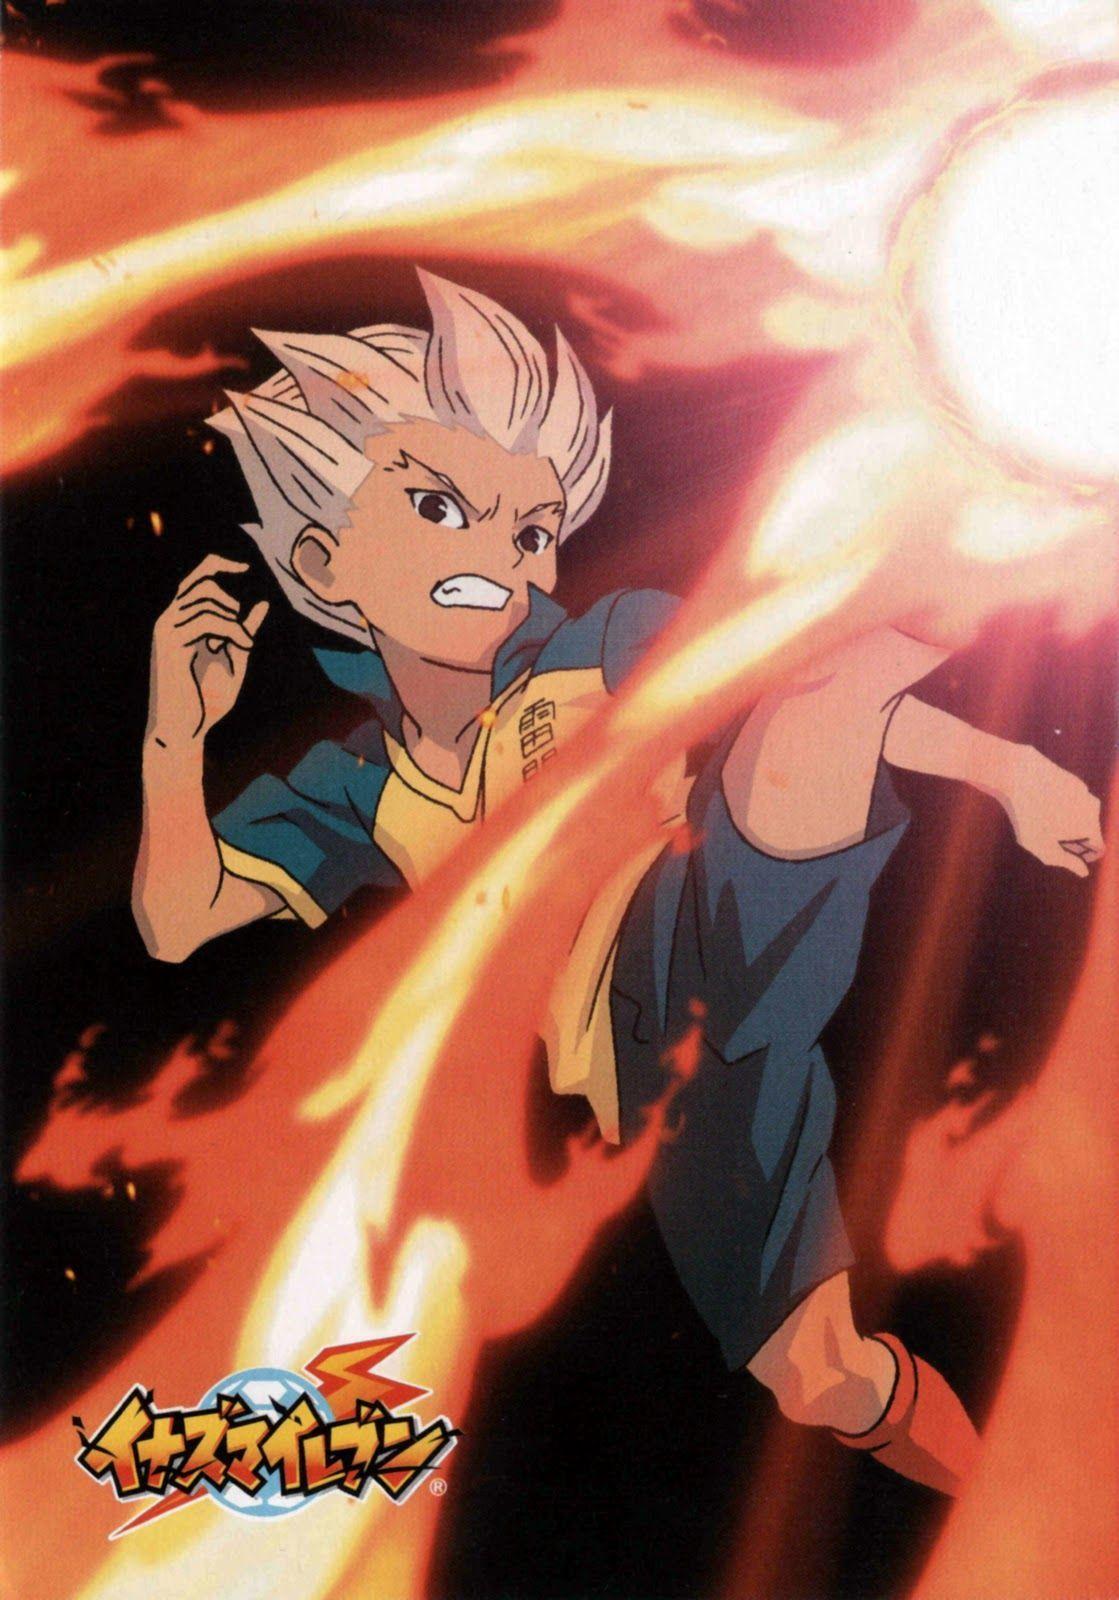 World of Mirage of Blaze - Complete Collection (DVD 5-Disc Set) Anime OVA  631595082173 | eBay